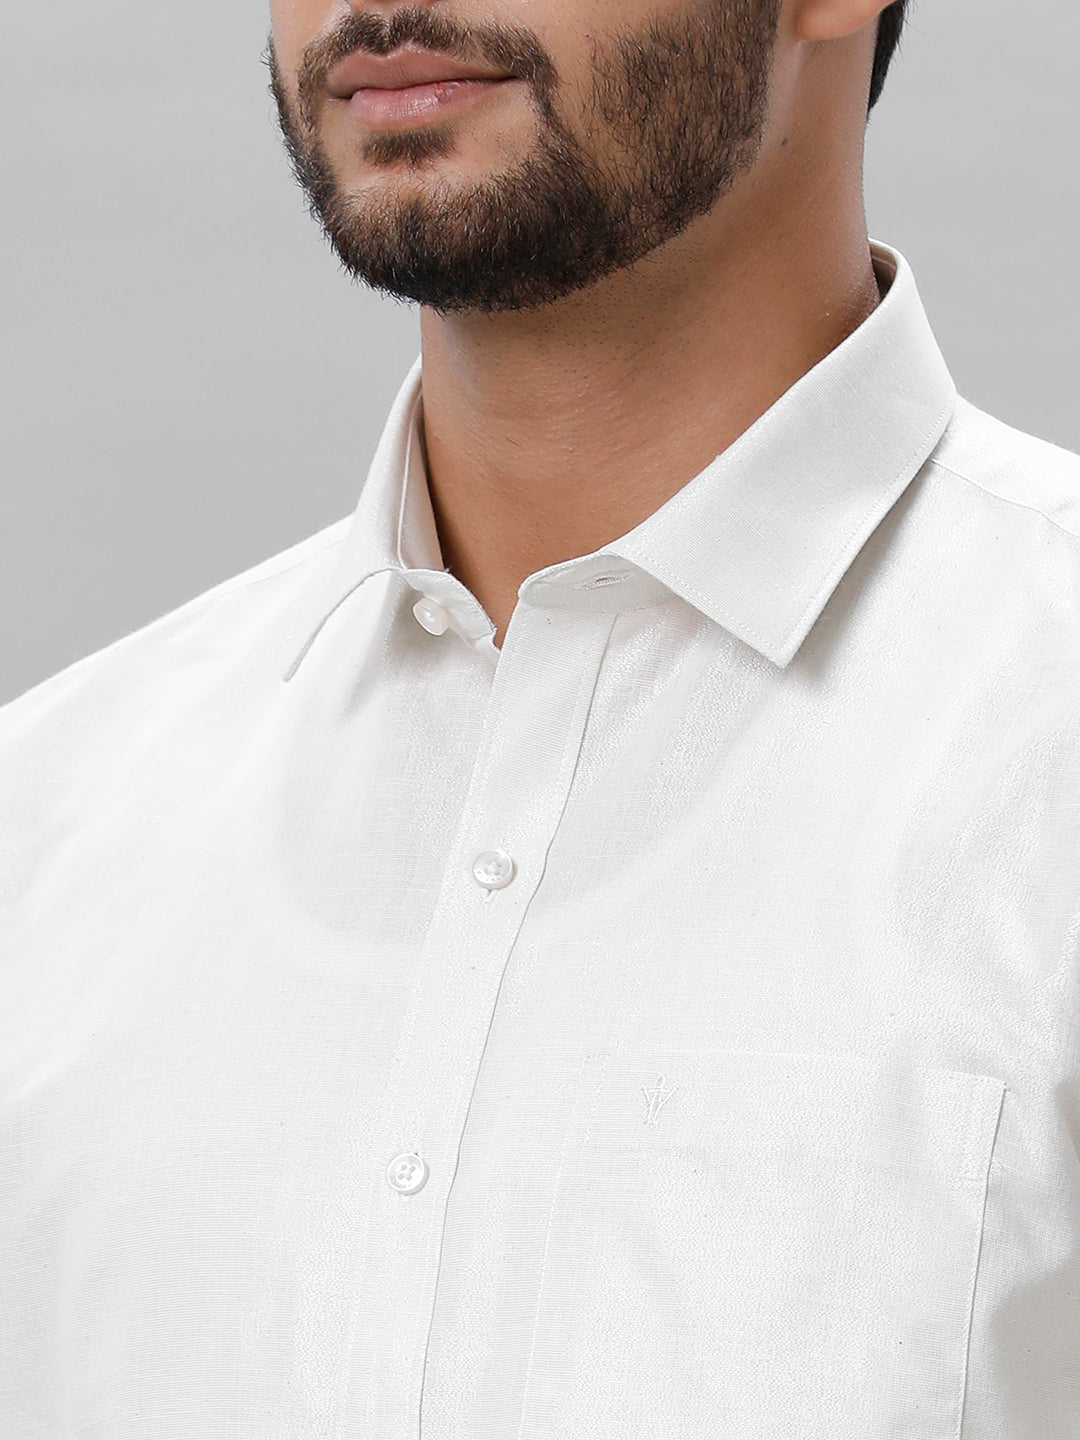 Tissue Silver Jari Shirt Dhoti Set with Saree Couple Combo OCC02-Zoom view